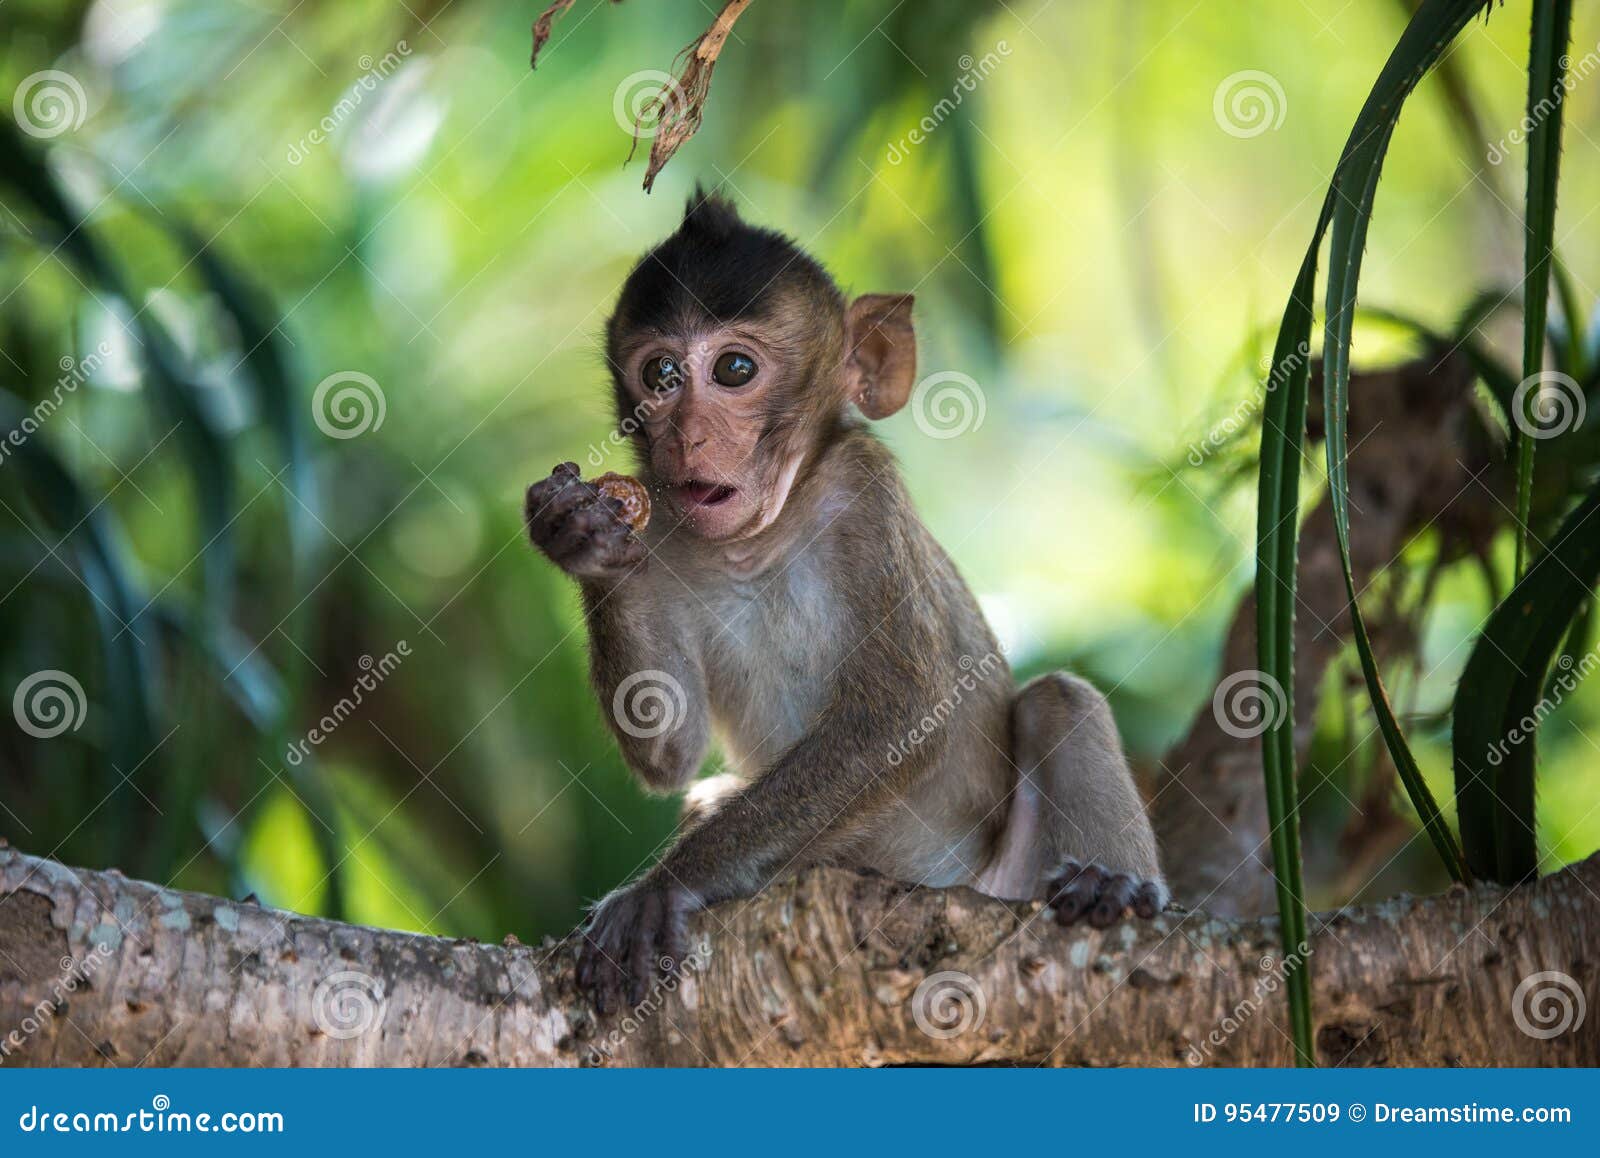 funny monkey baby on tree